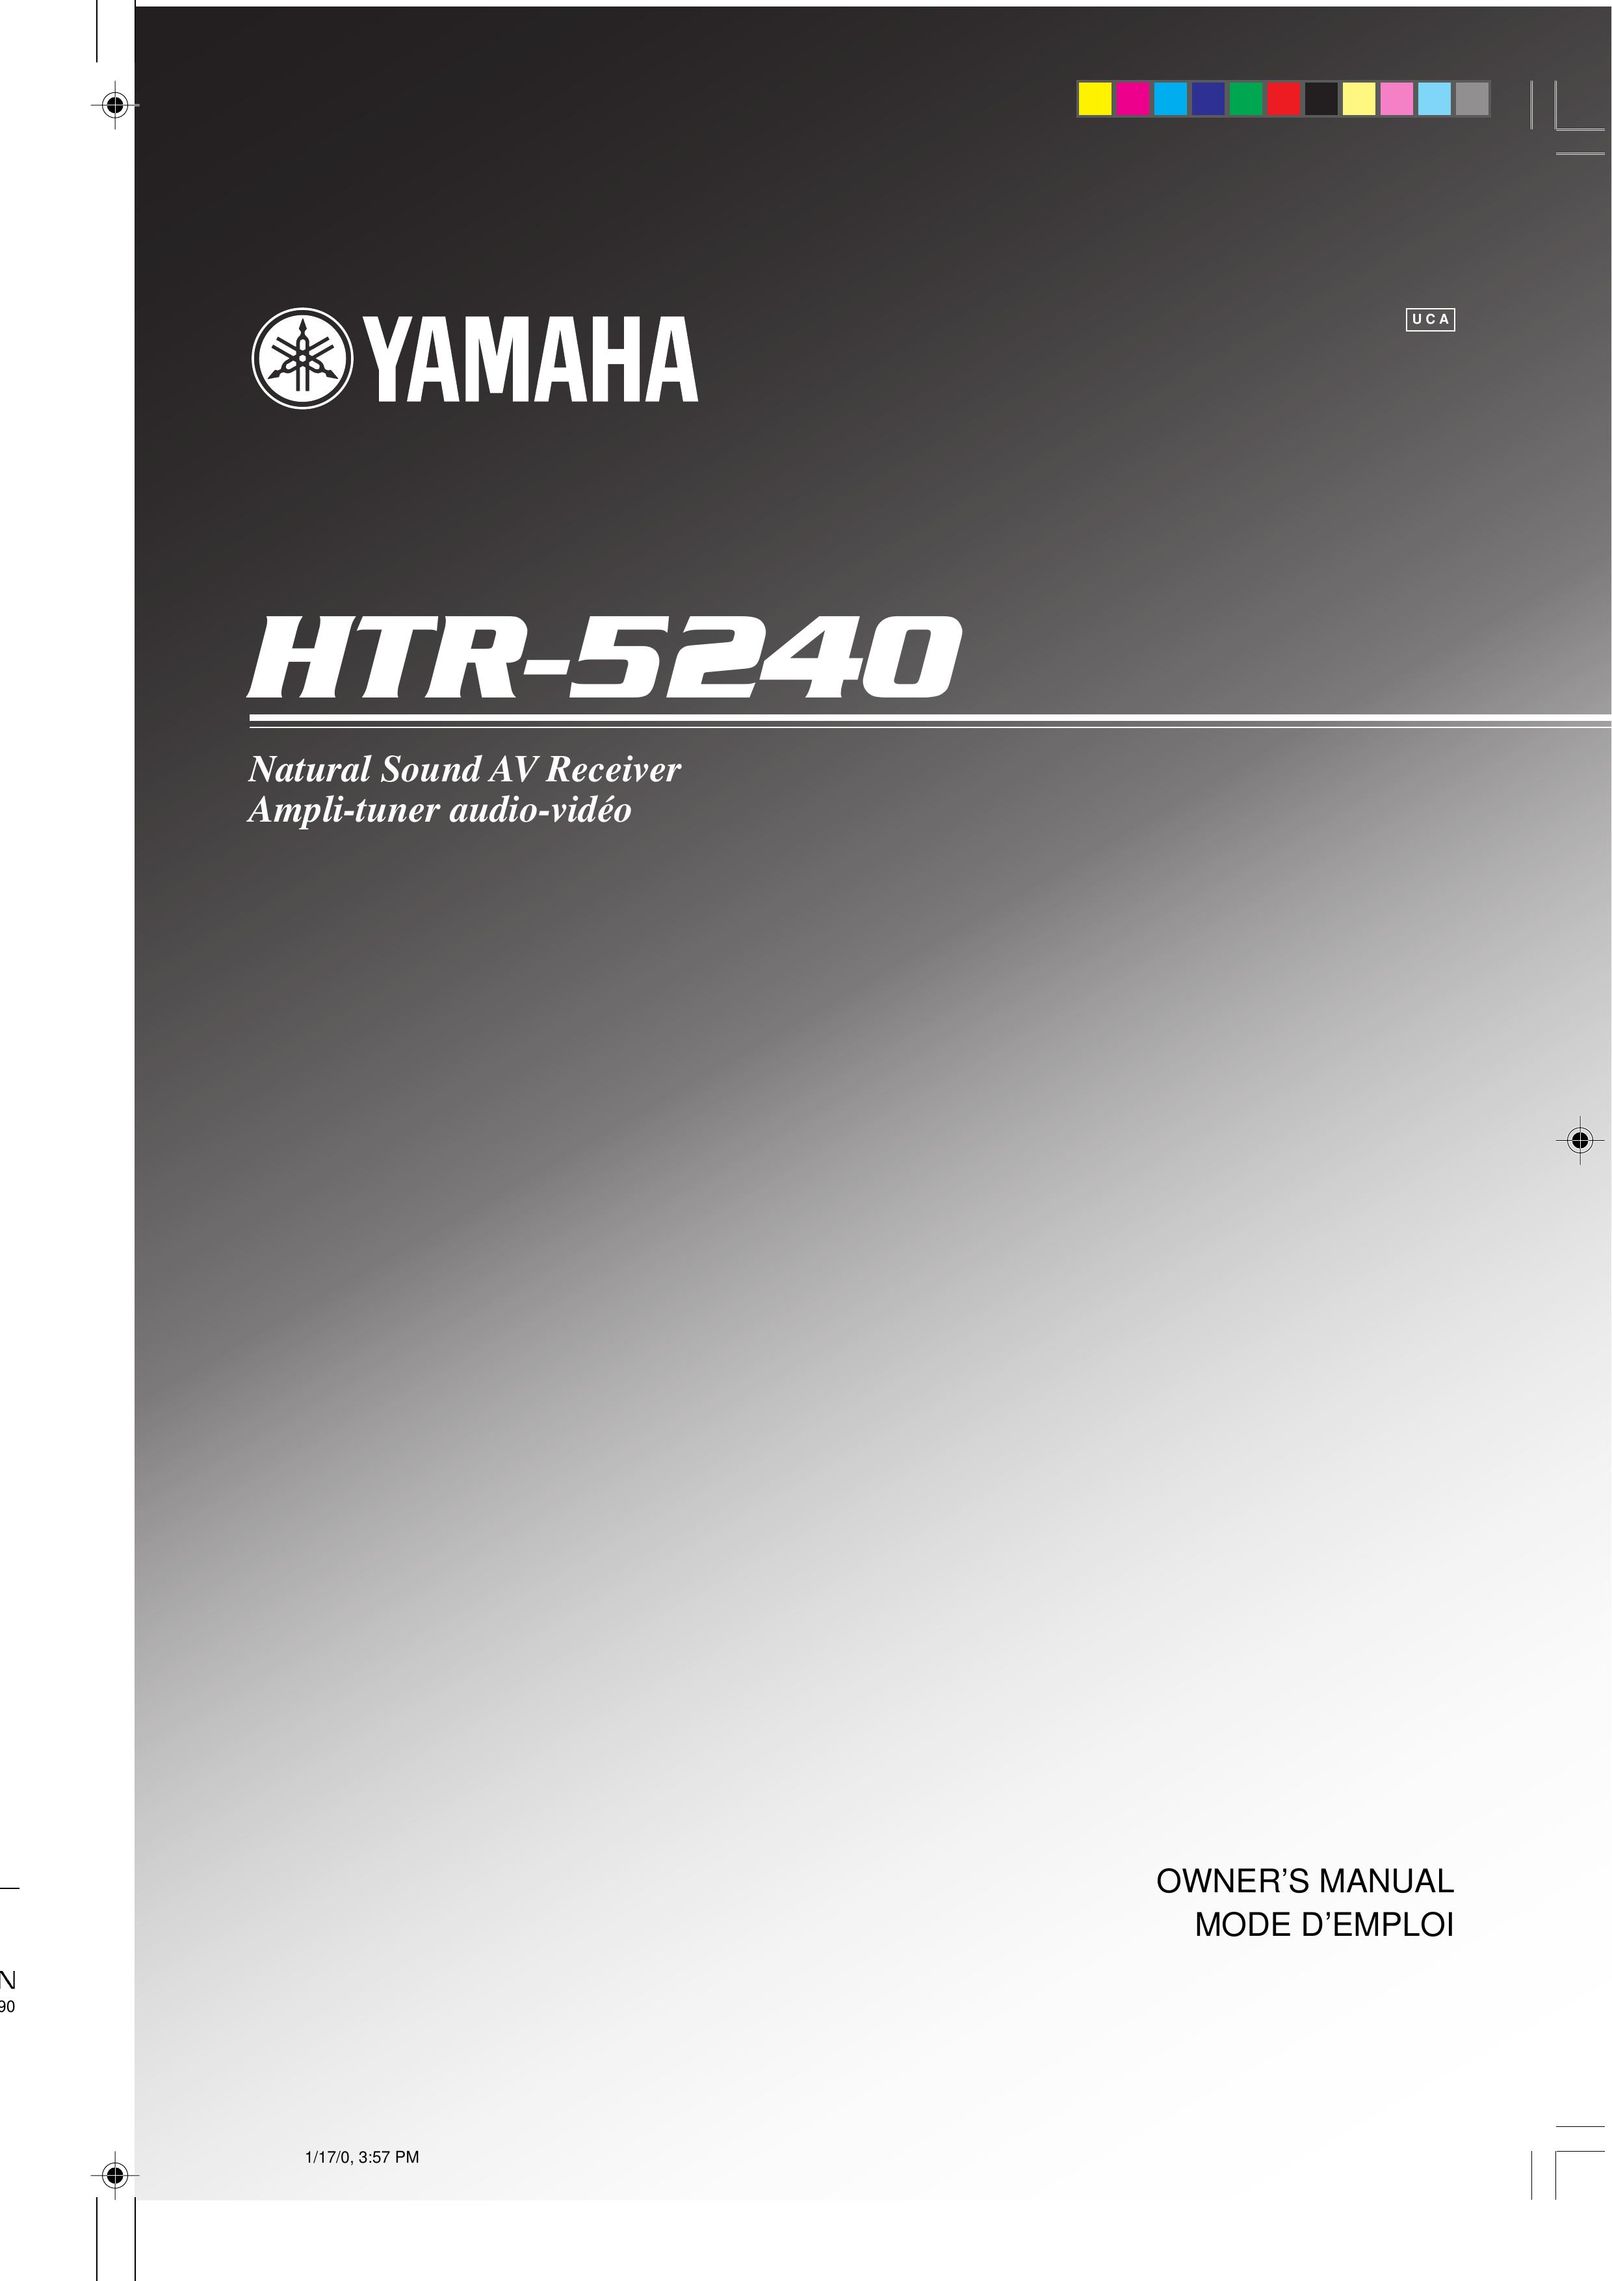 Yamaha HTR-5240 Stereo System User Manual